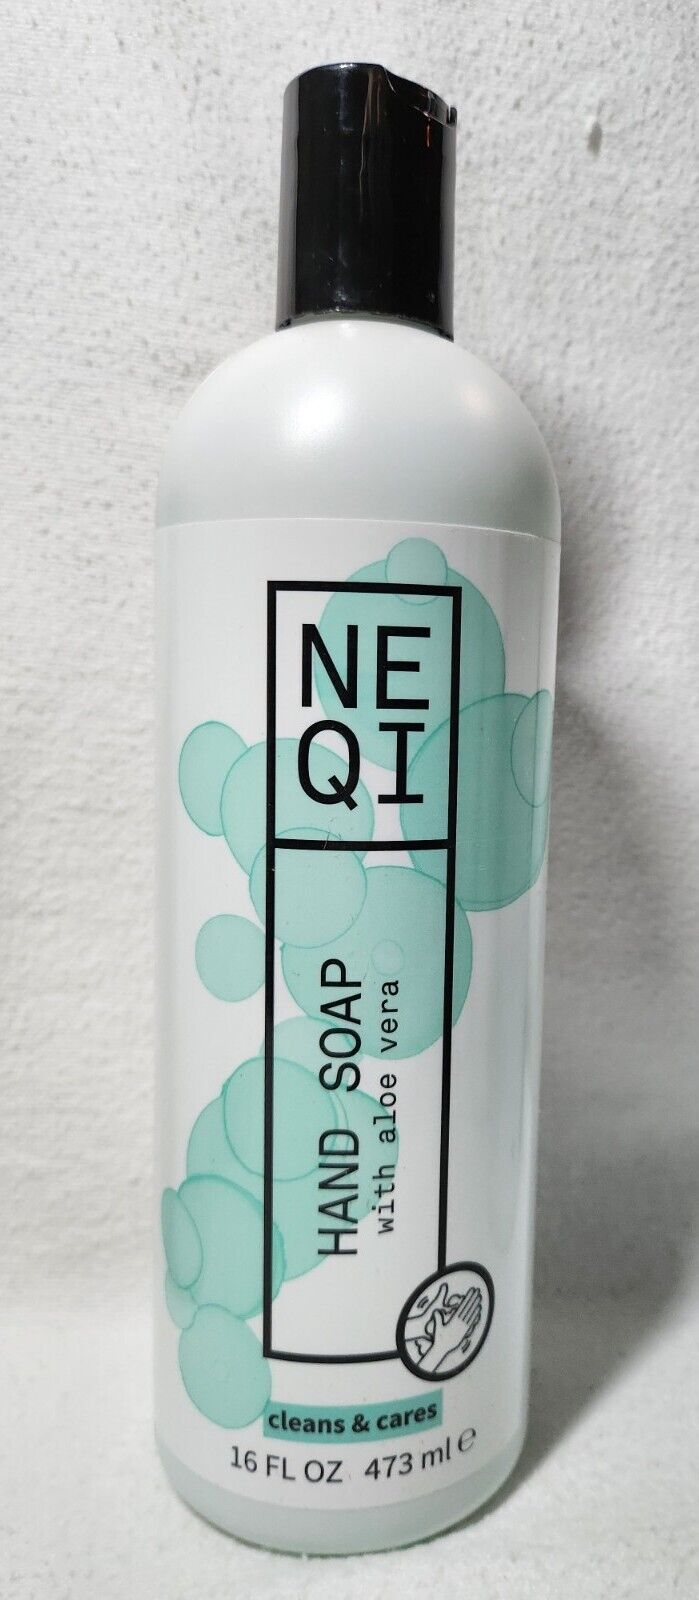 NEQI Hand Soap w/Aloe Vera, Vegan, Paraben-Free, 16 oz